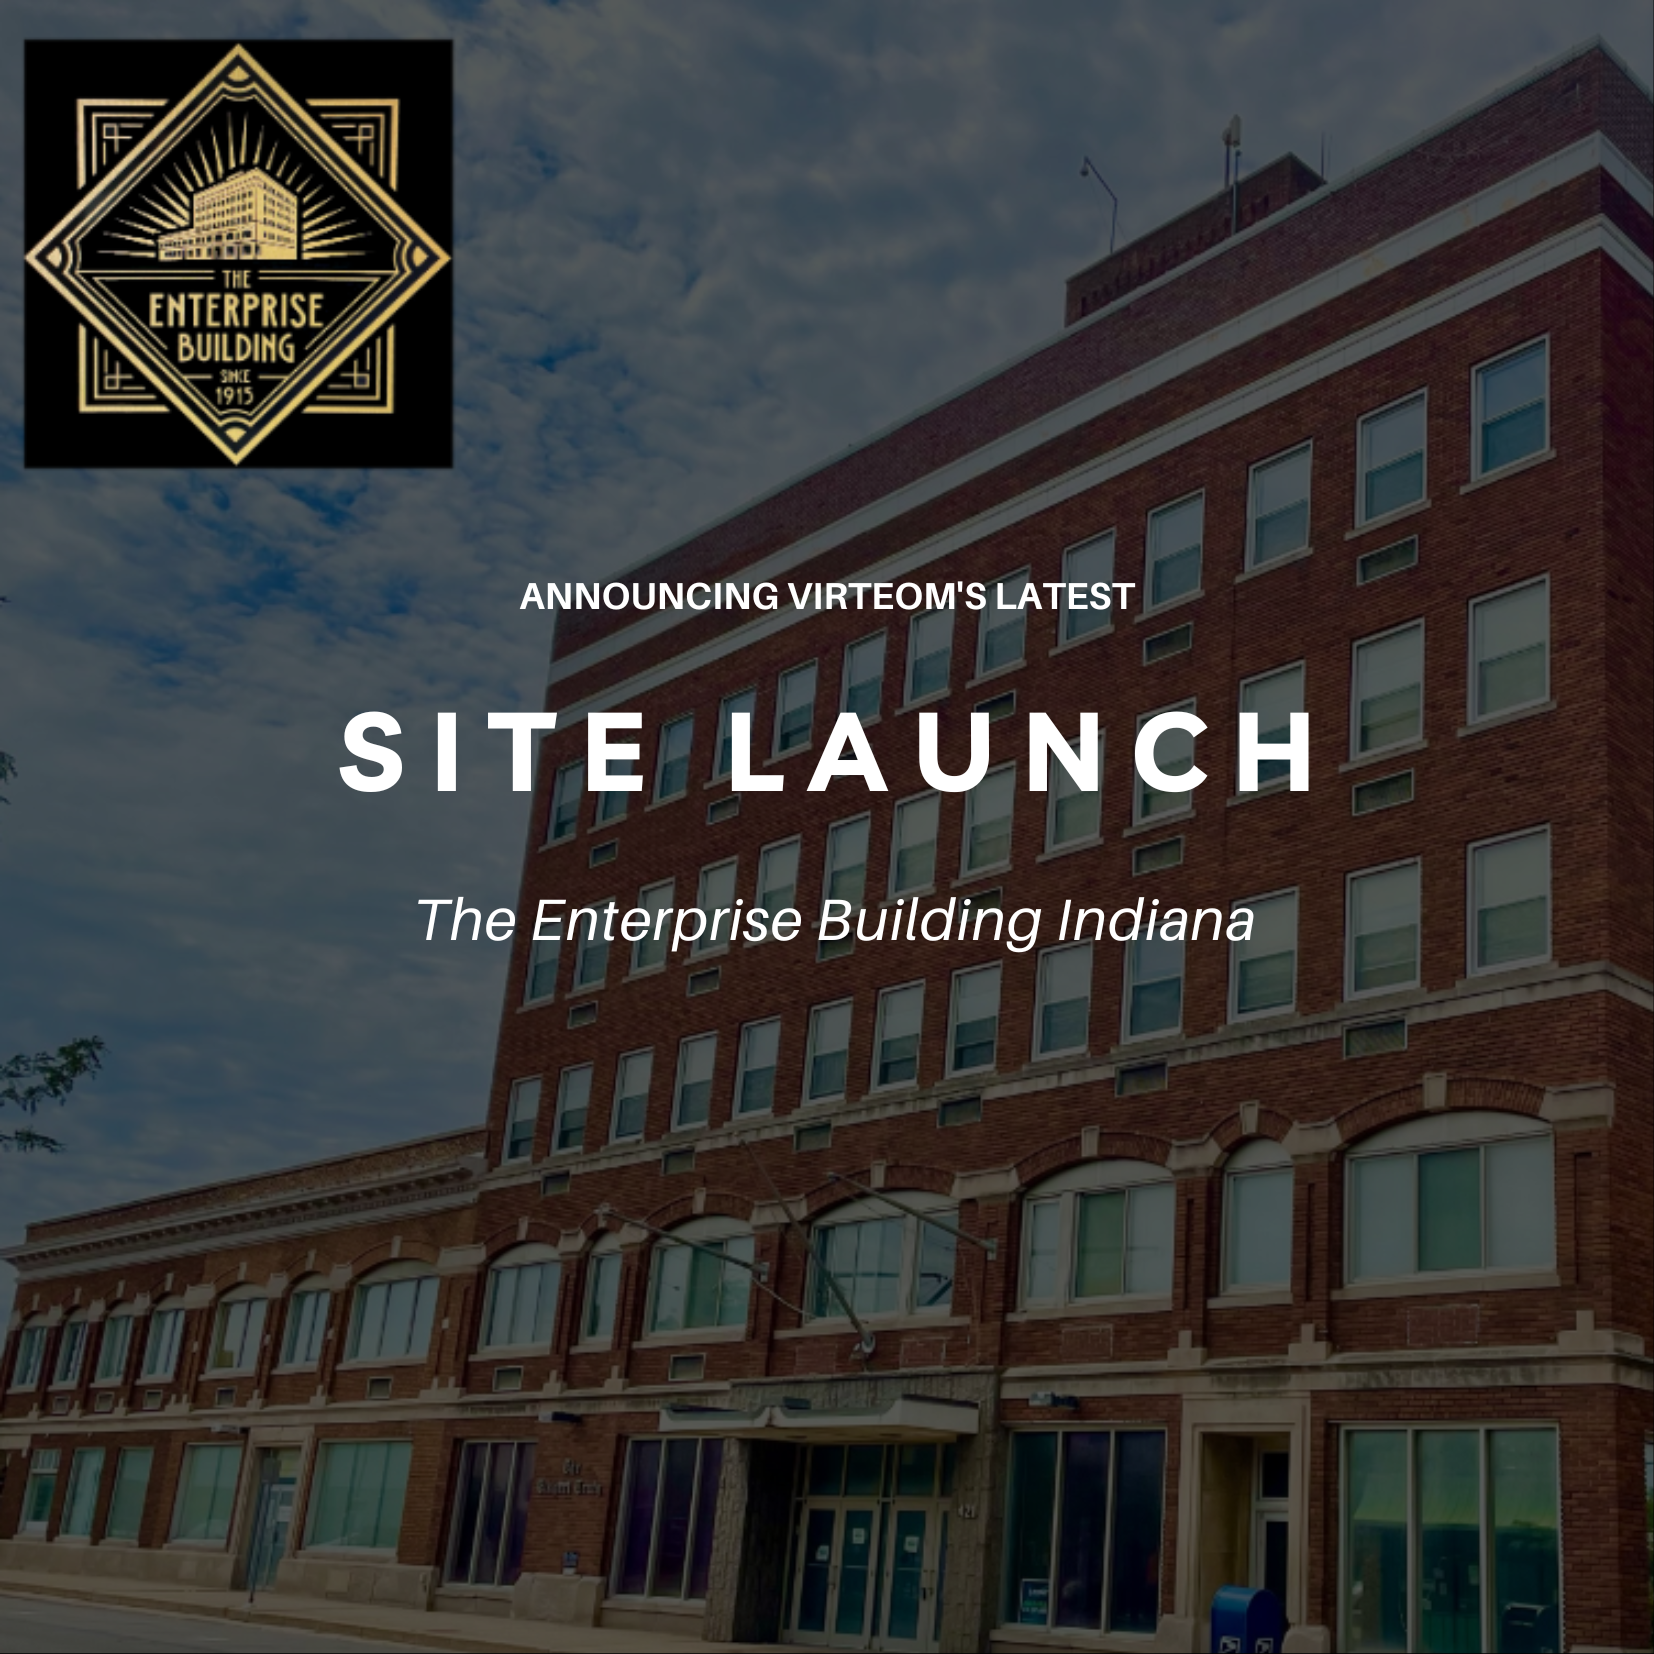 Site Launch: The Enterprise Building Indiana